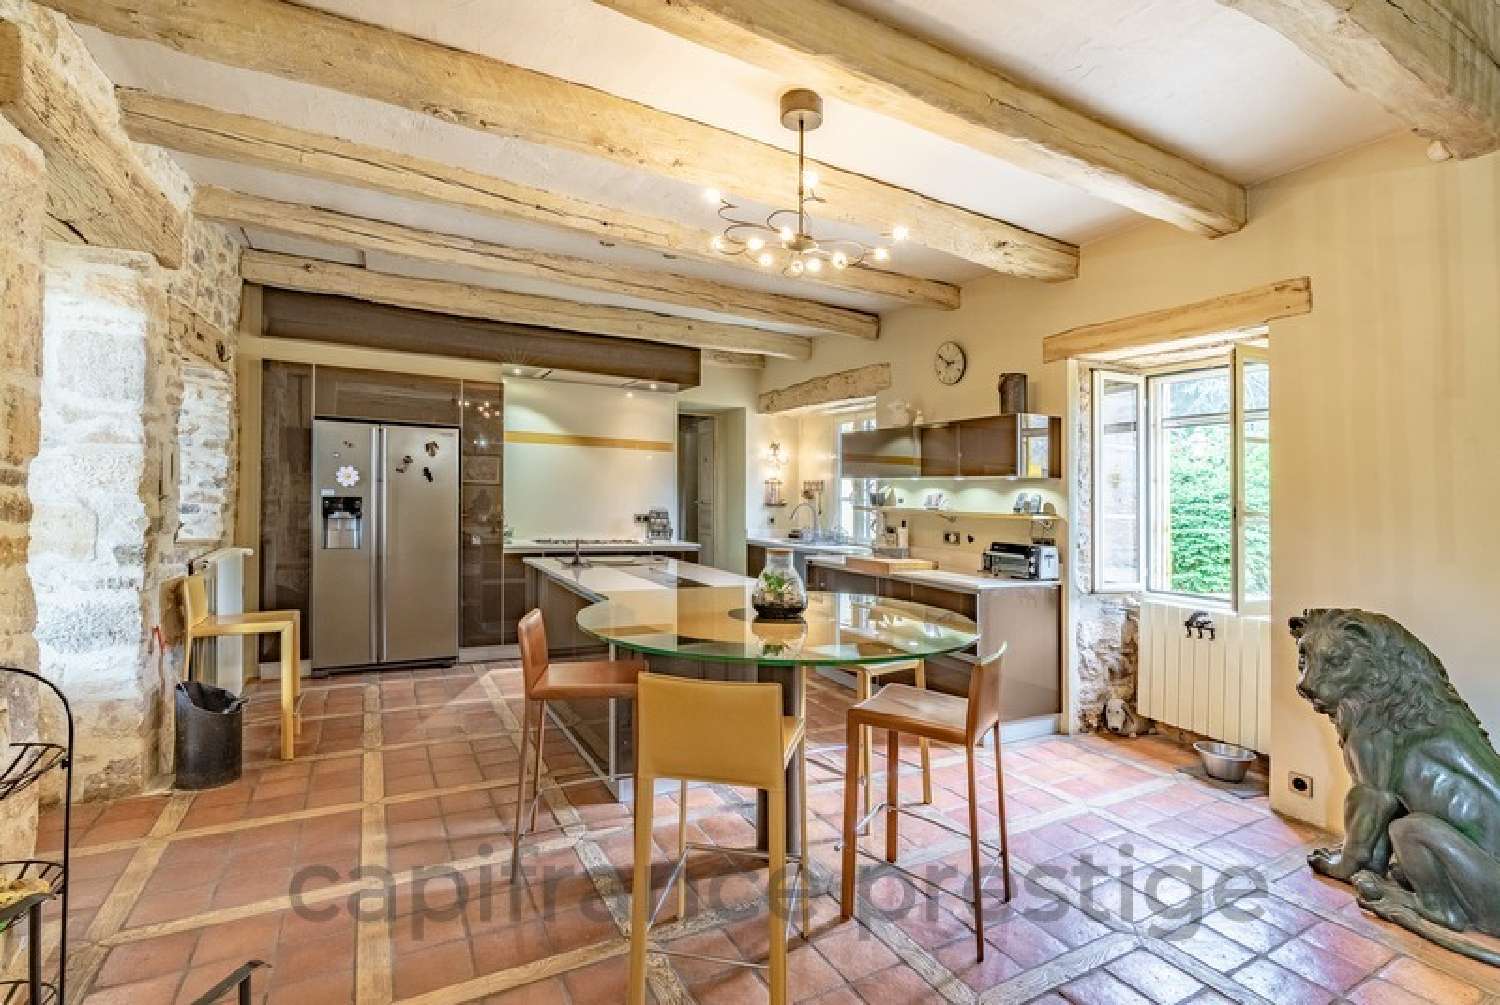  à vendre maison Monpazier Dordogne 3